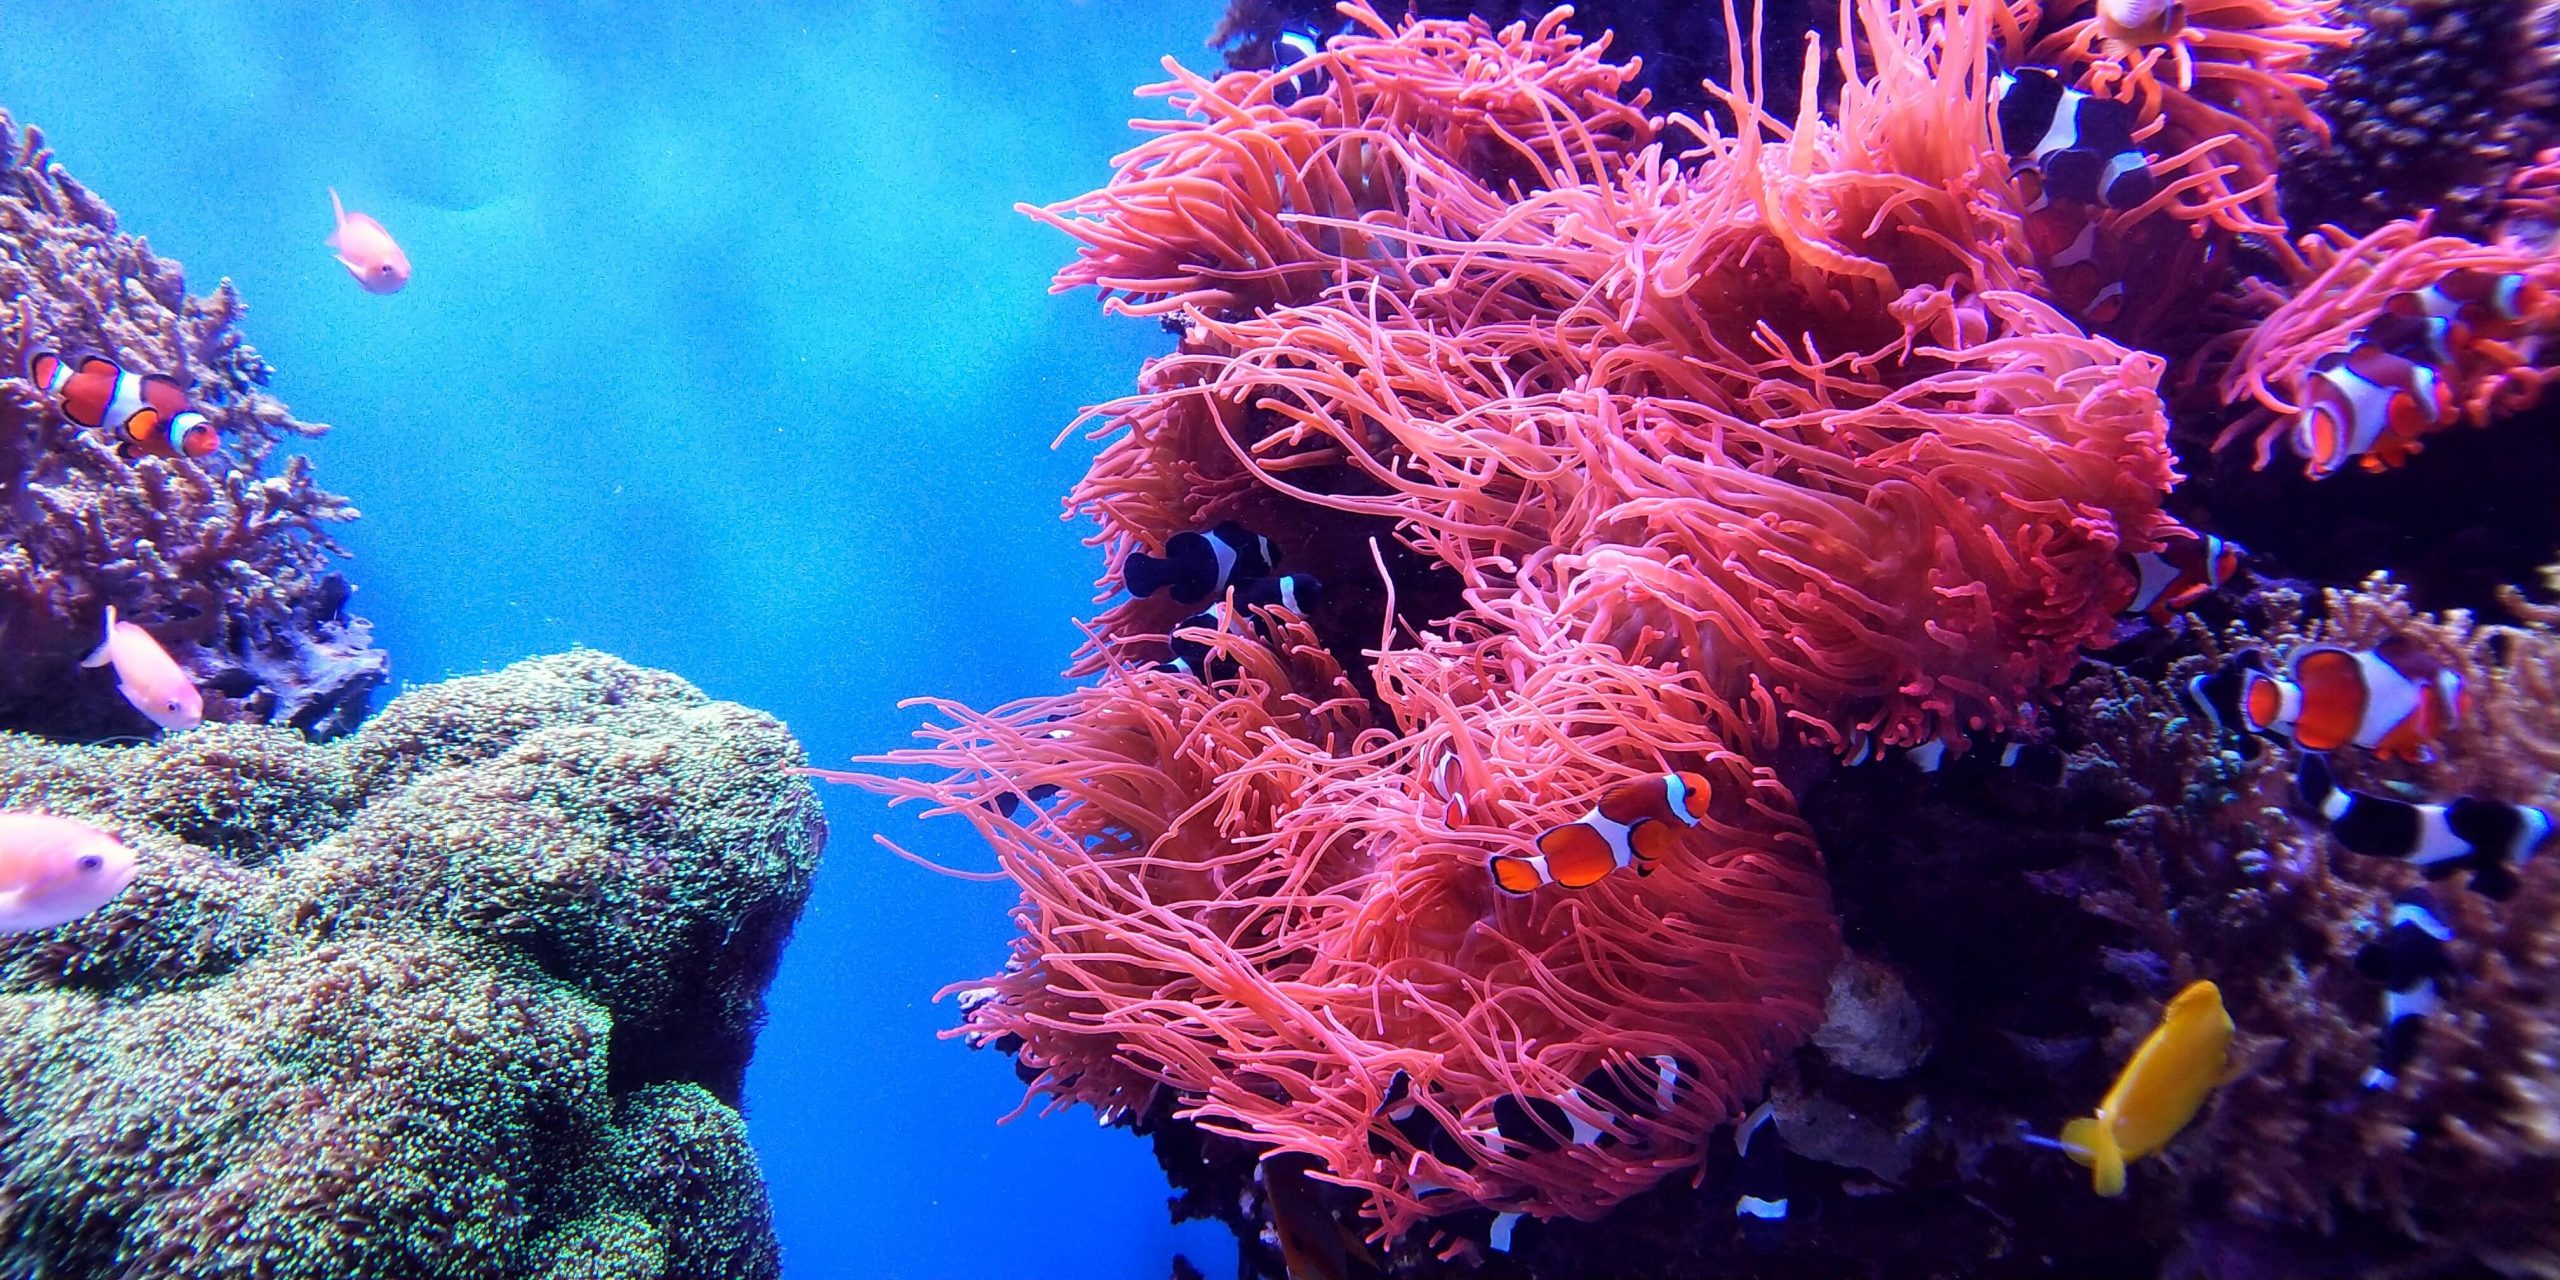 Great Barrier Reef for Australia advice post on Brads Backpack Travel Blog